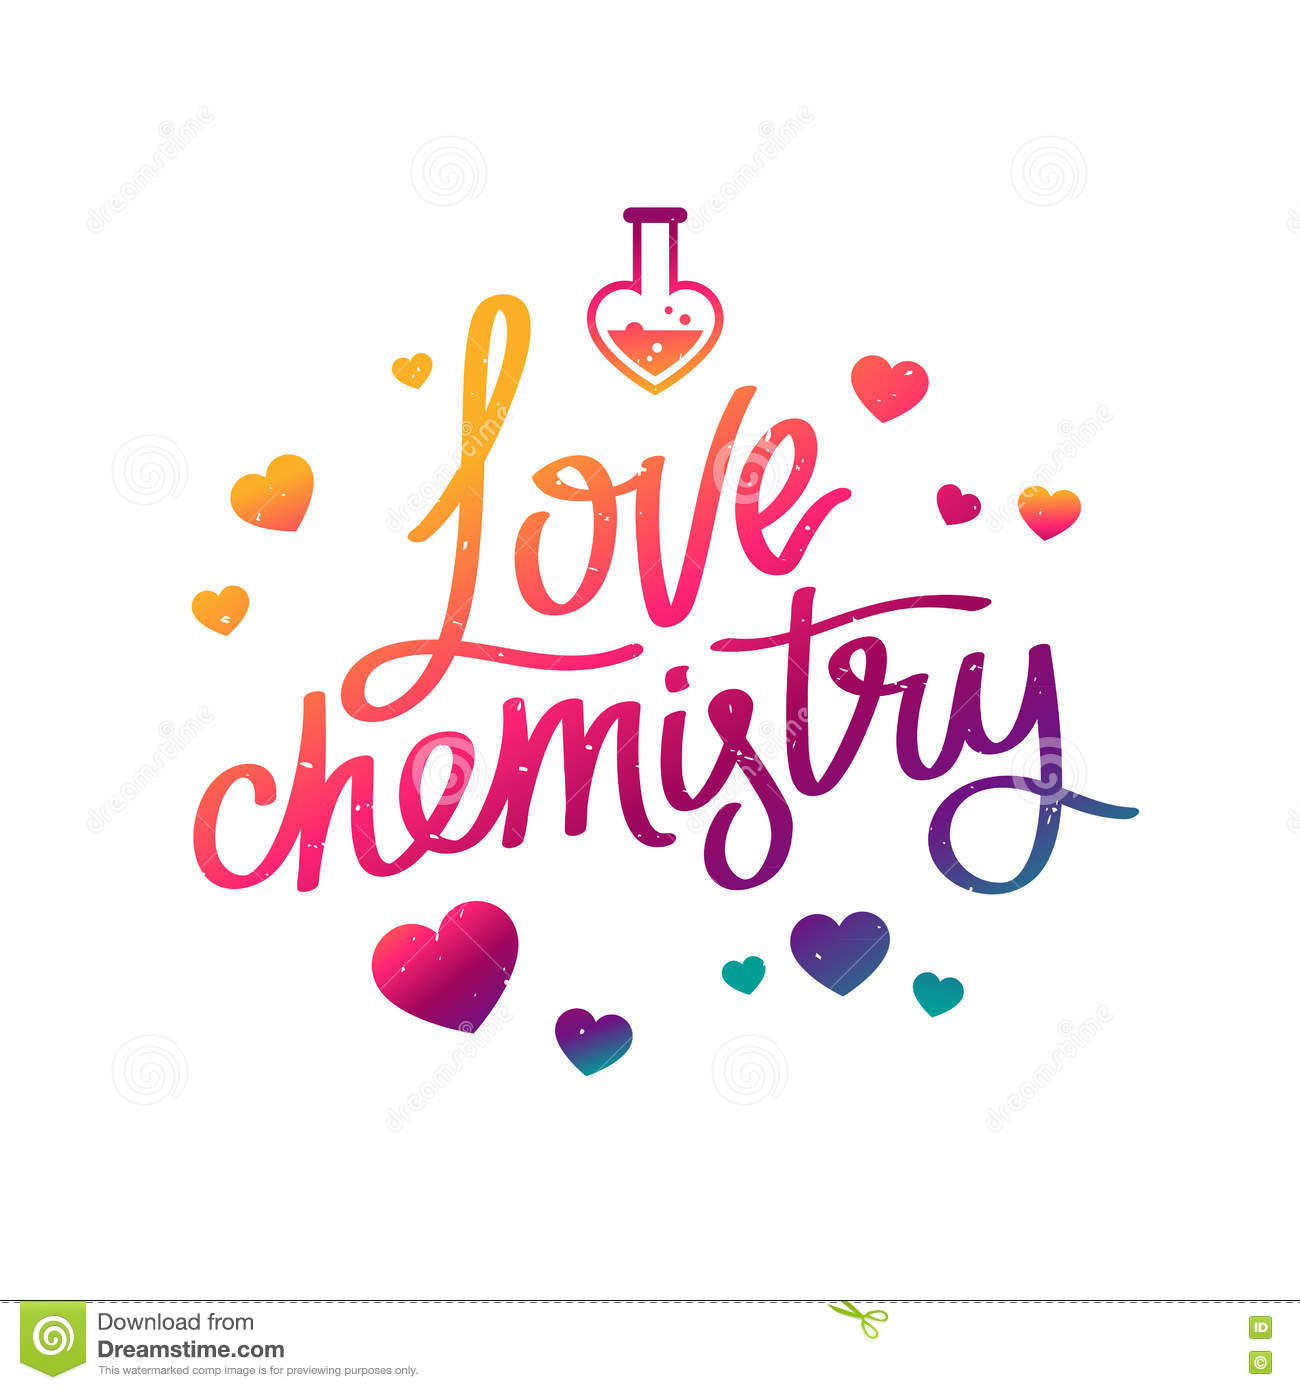 Love chemistry clipart.